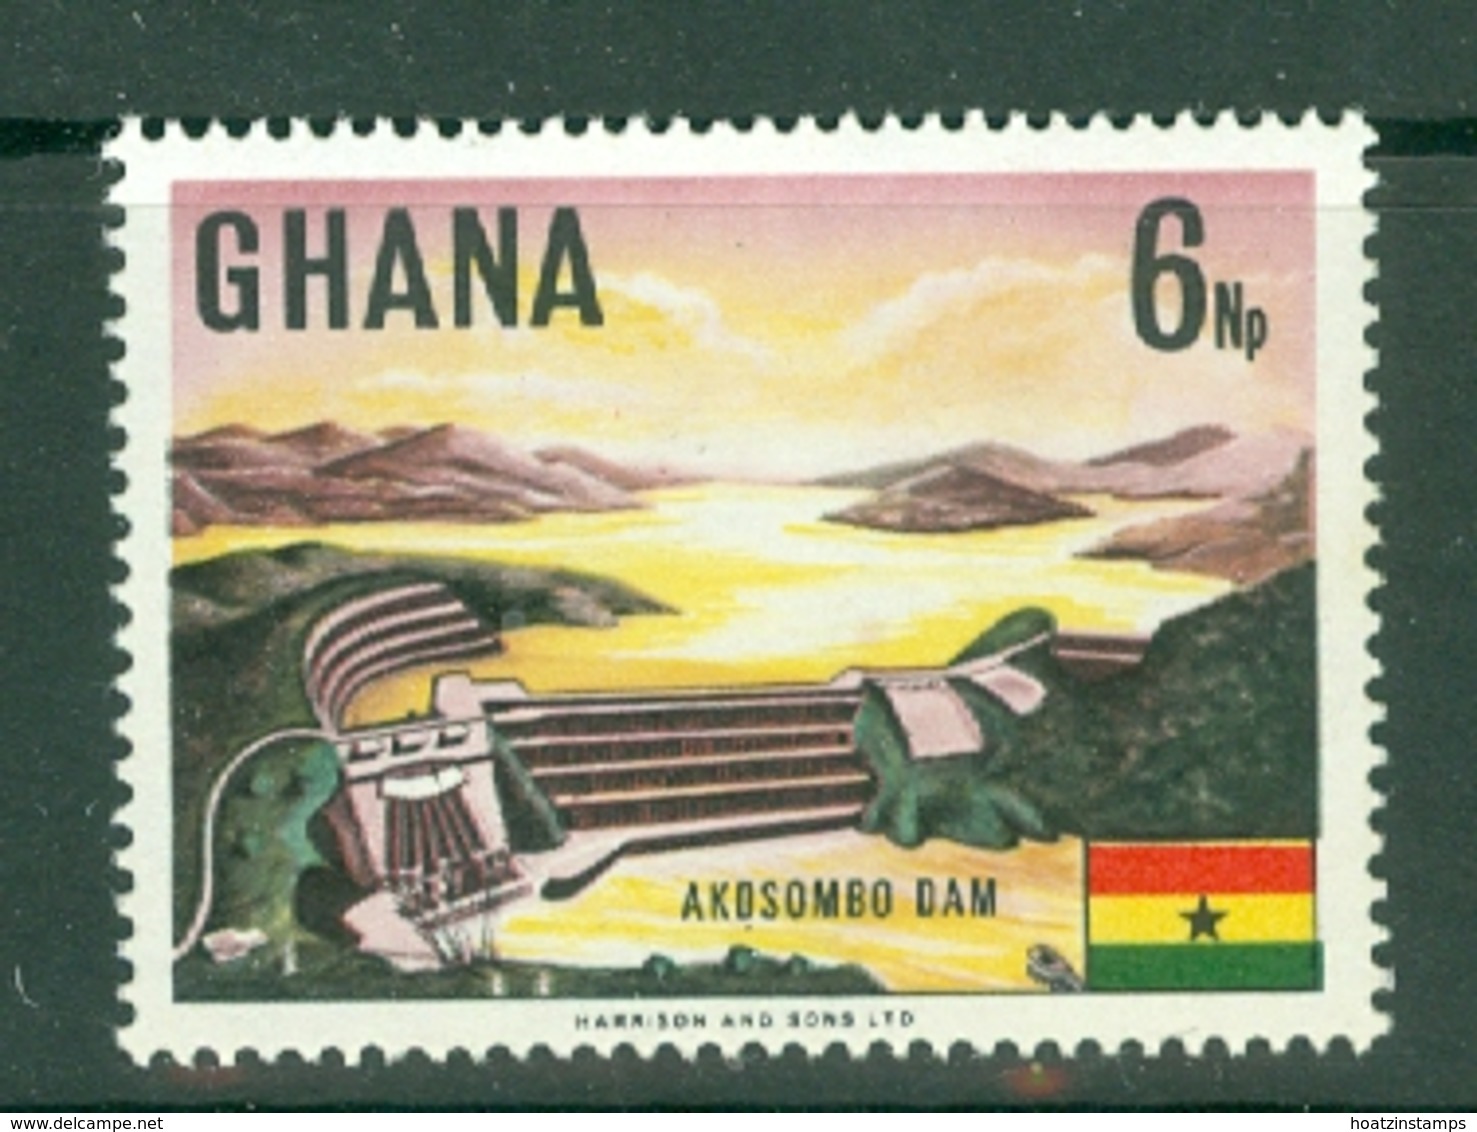 Ghana: 1967   Pictorial - New Currency   SG466   6np   MH - Ghana (1957-...)